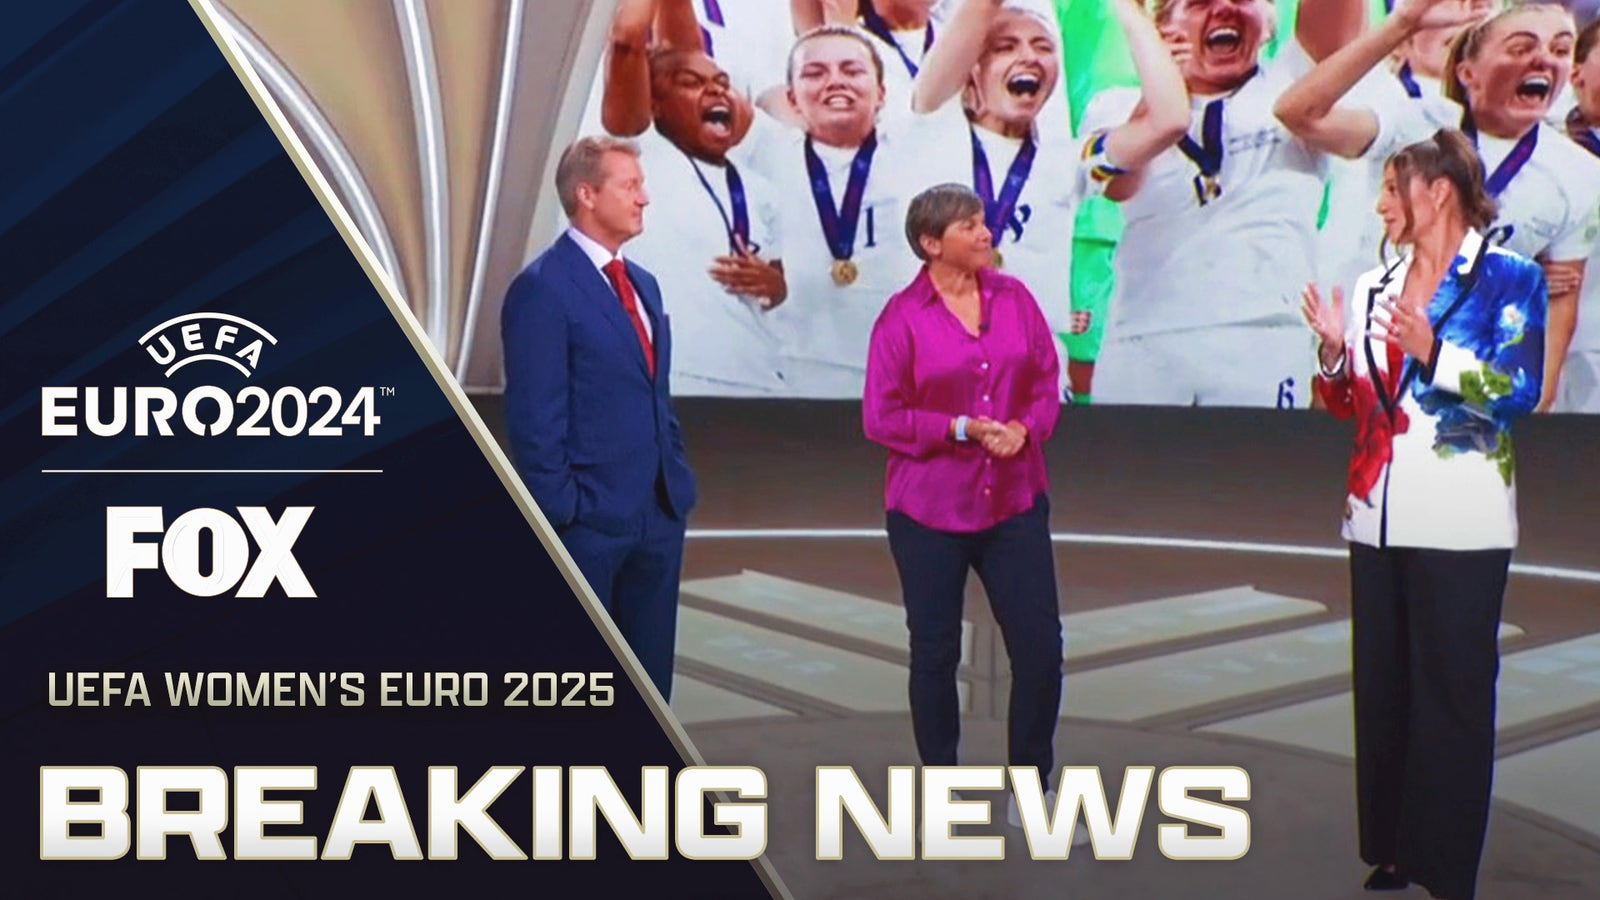 BREAKING NEWS: UEFA Women's Euro 2025 special announcement